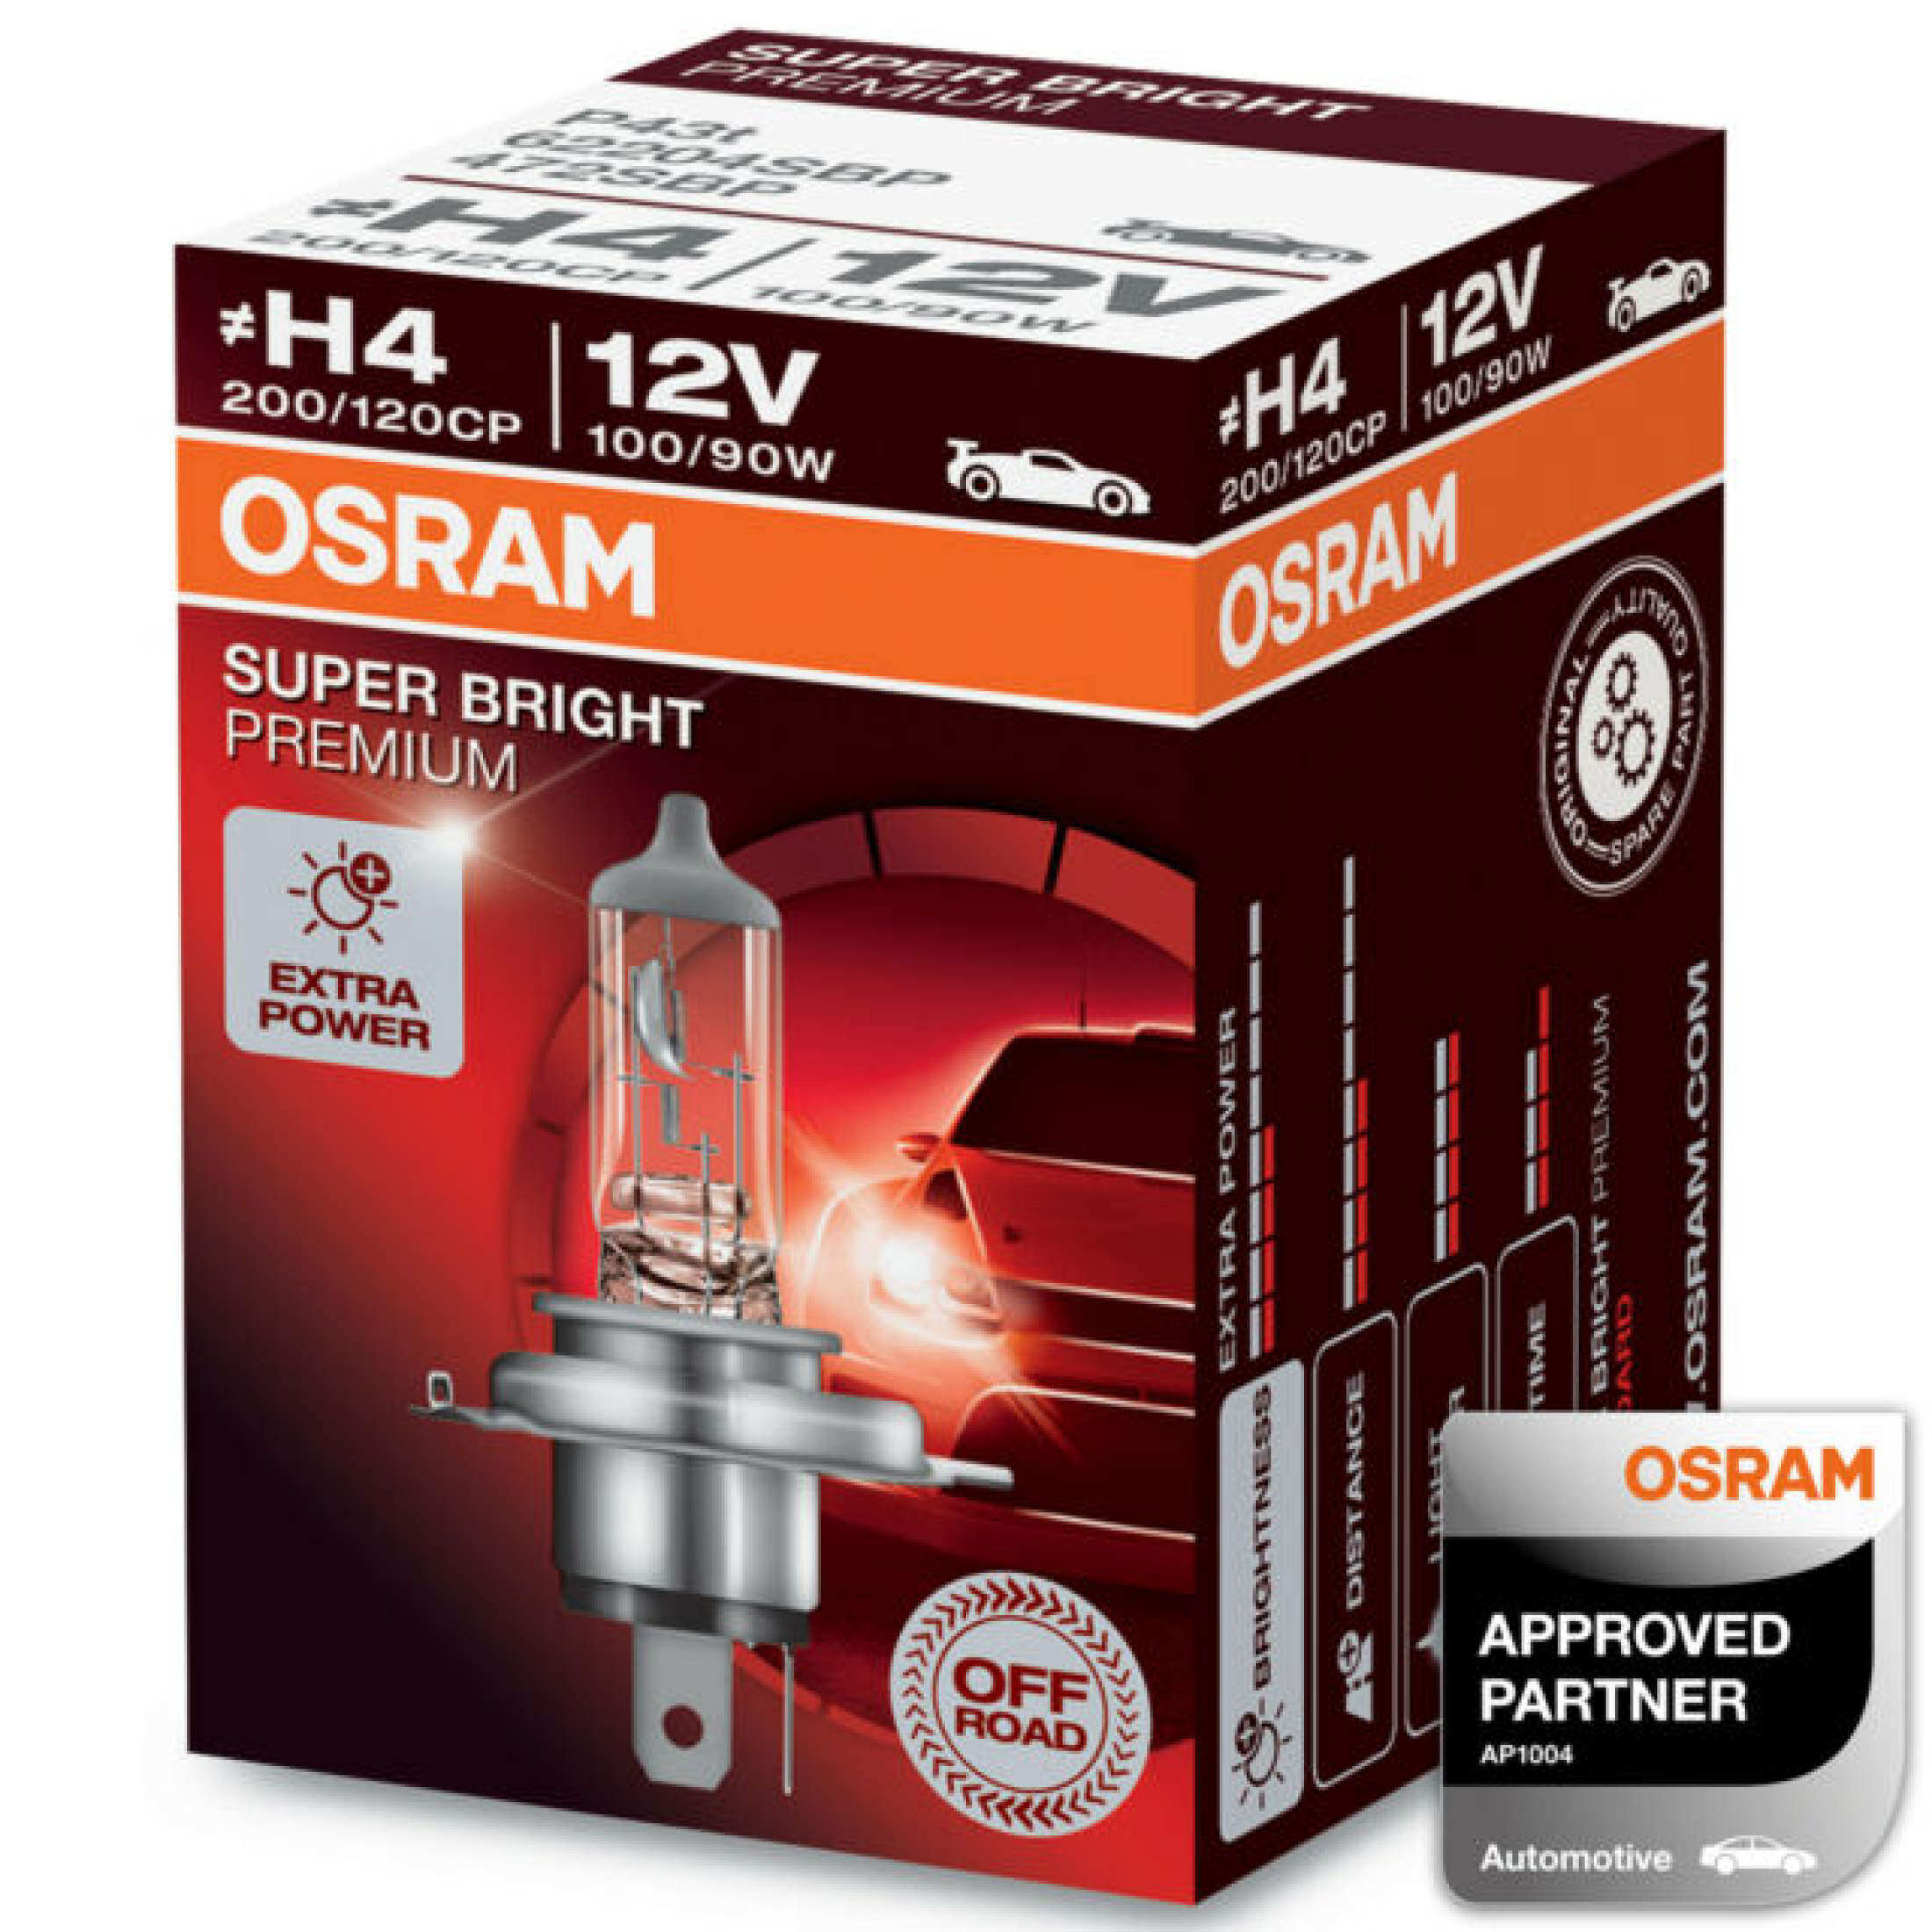 OSRAM H4 100W Headlight Bulb P43T 62204SBP 12V Super Bright Premium 200 120CP 472SBP